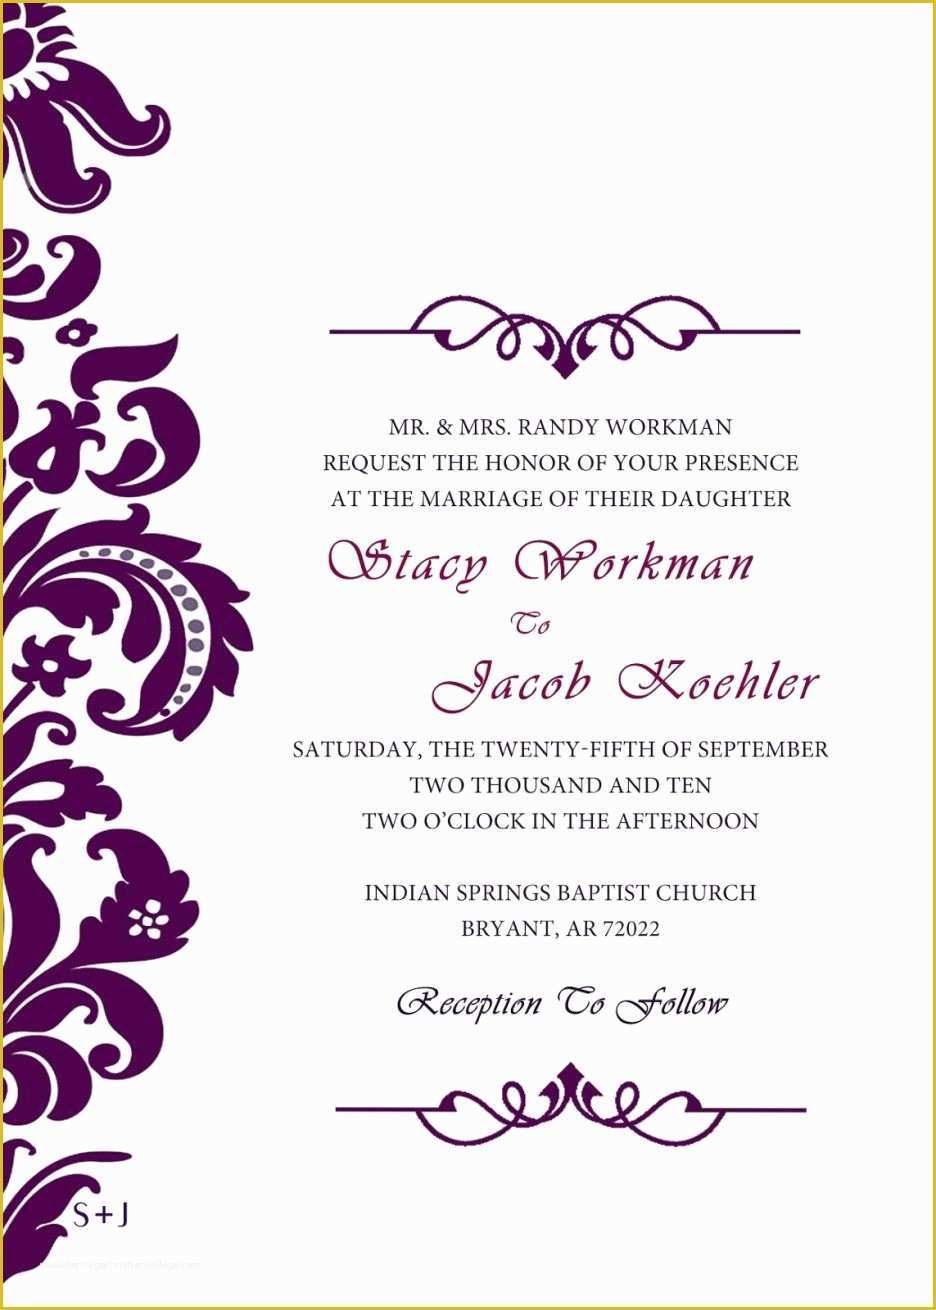 Fancy Invitation Template Free Of Wedding Invitation Templates Invitations Wedding formal